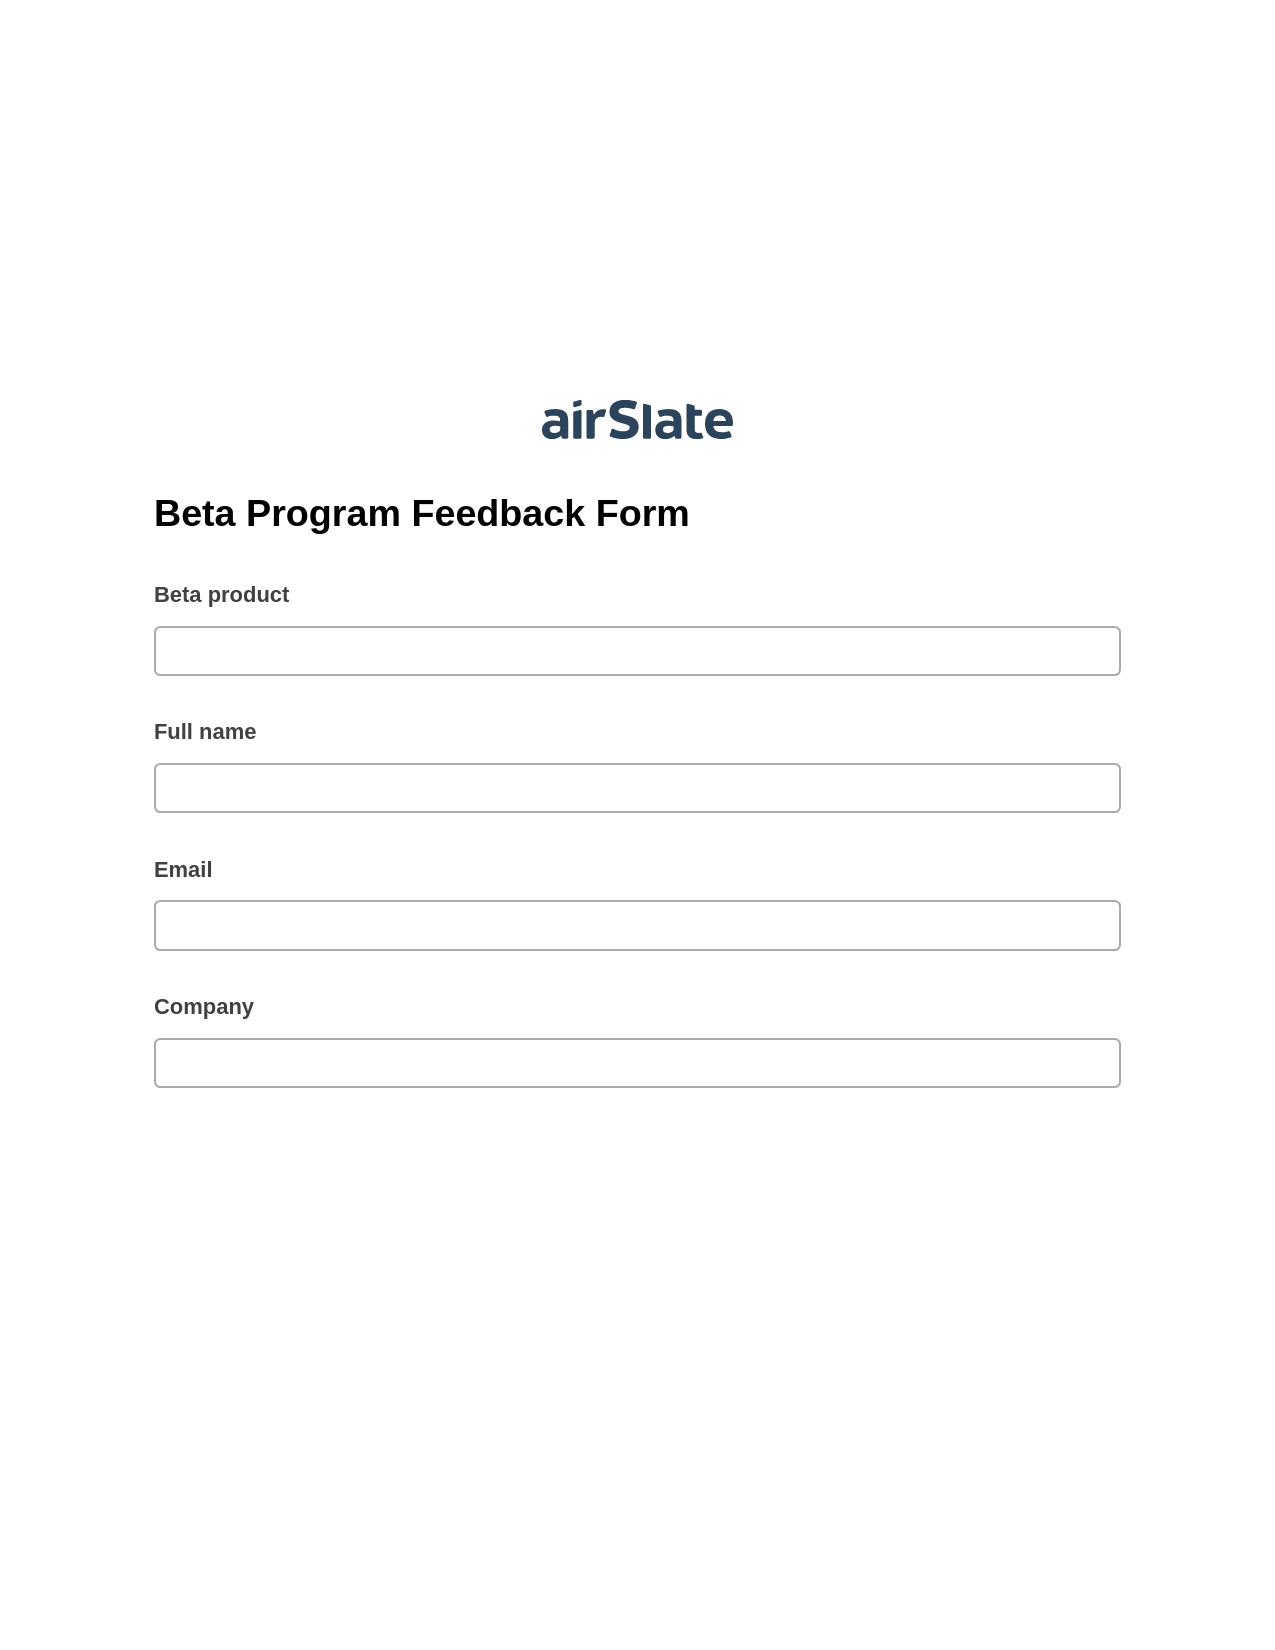 Beta Program Feedback Form Pre-fill from Excel Spreadsheet Bot, Webhook Bot, Dropbox Bot